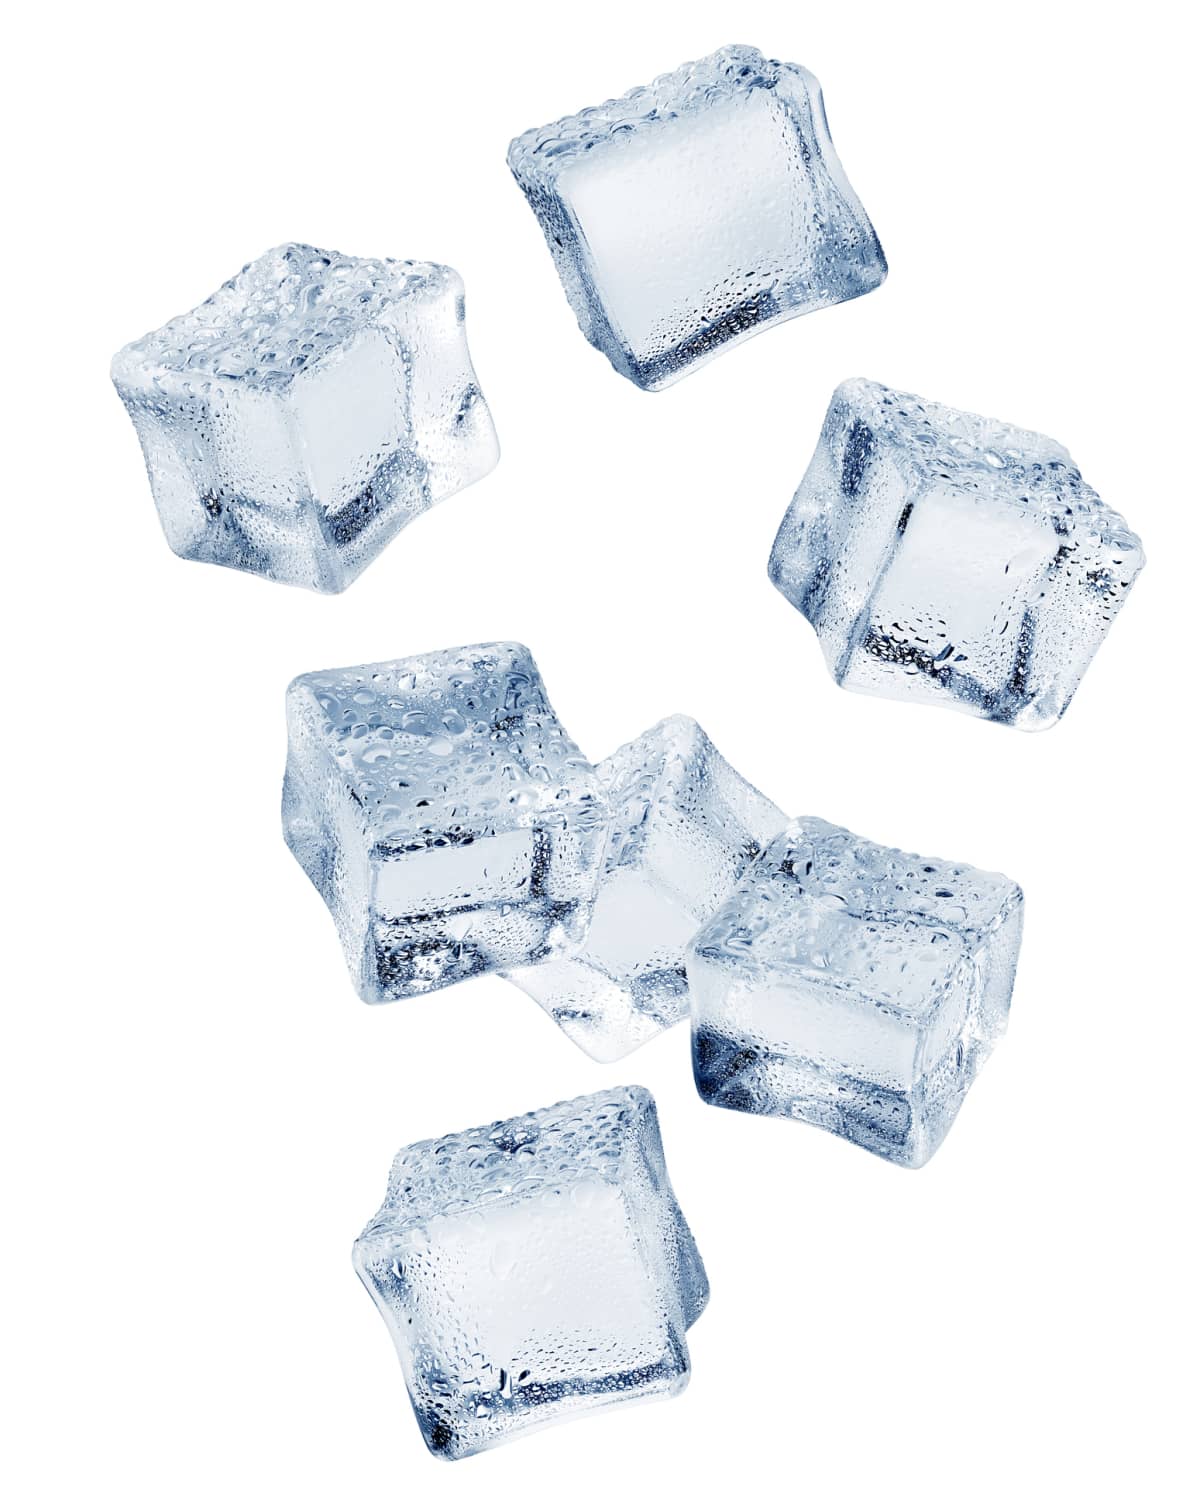 Falling ice cubes isolated on white background